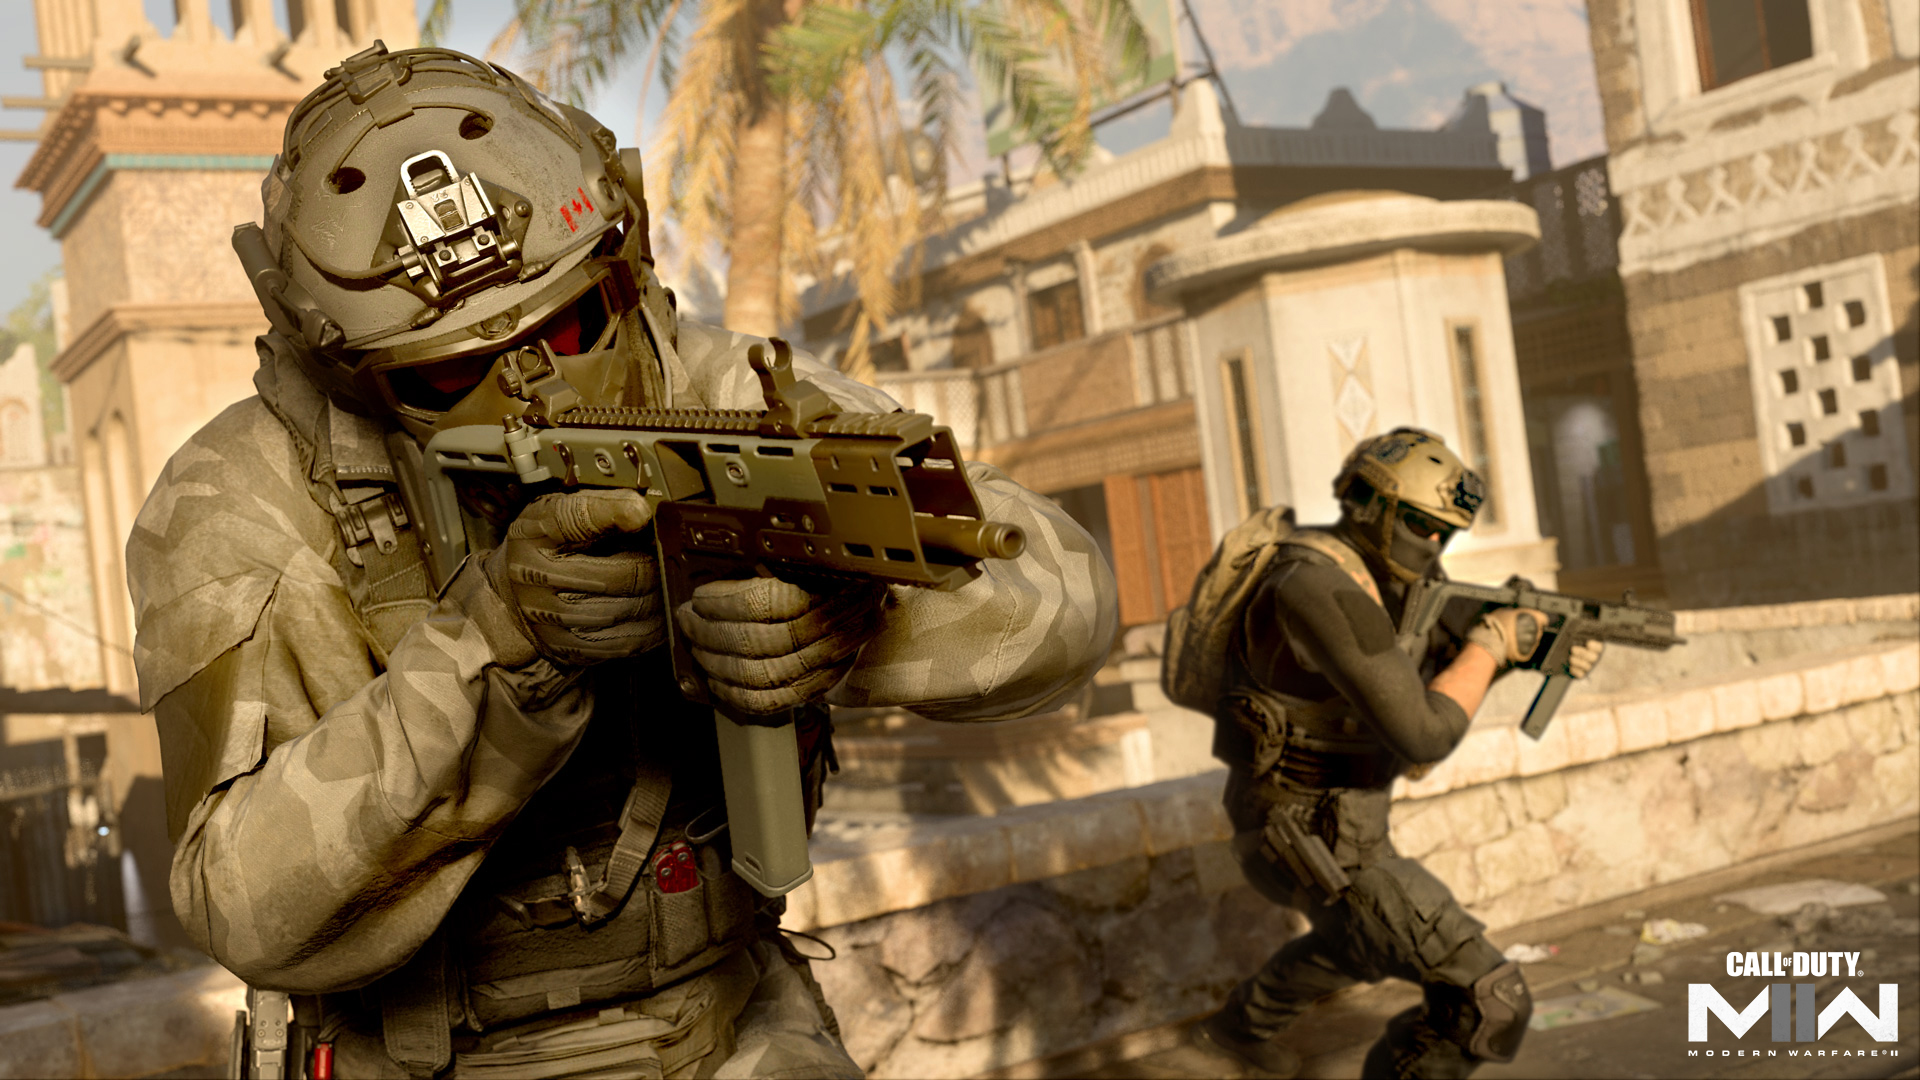 Modern Warfare 2 and Warzone 2 Season 4 has been revealed